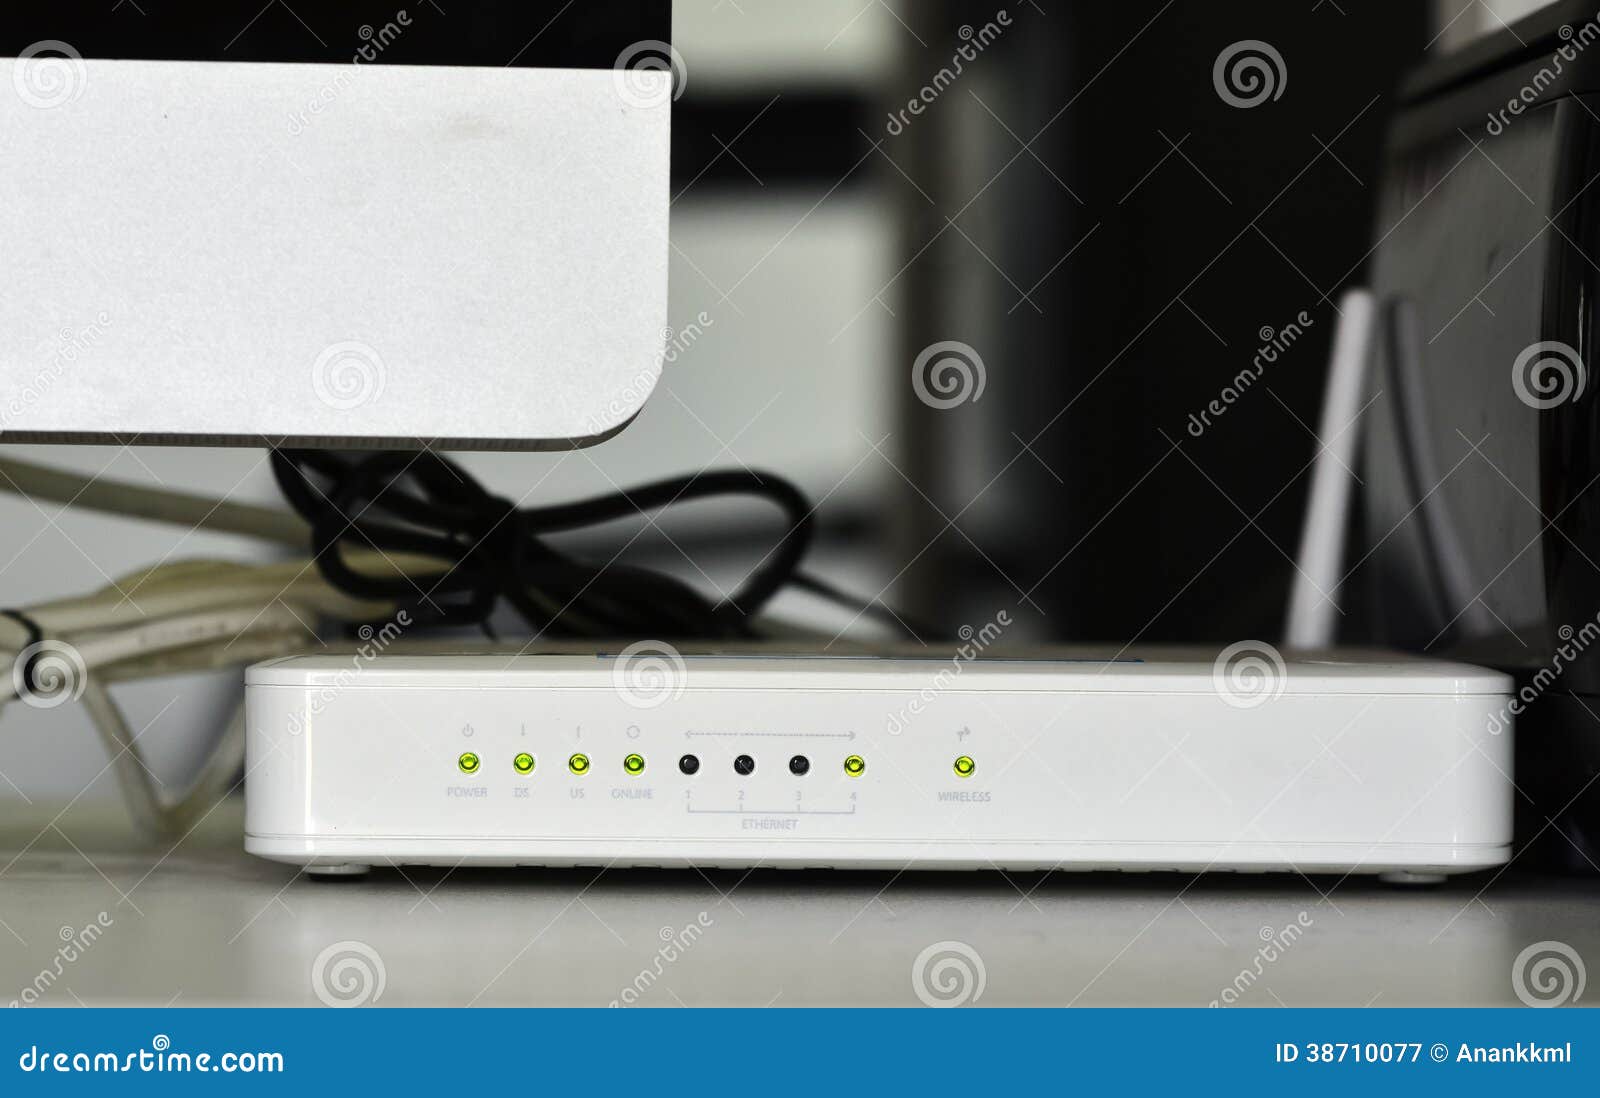 adsl wifi router modem